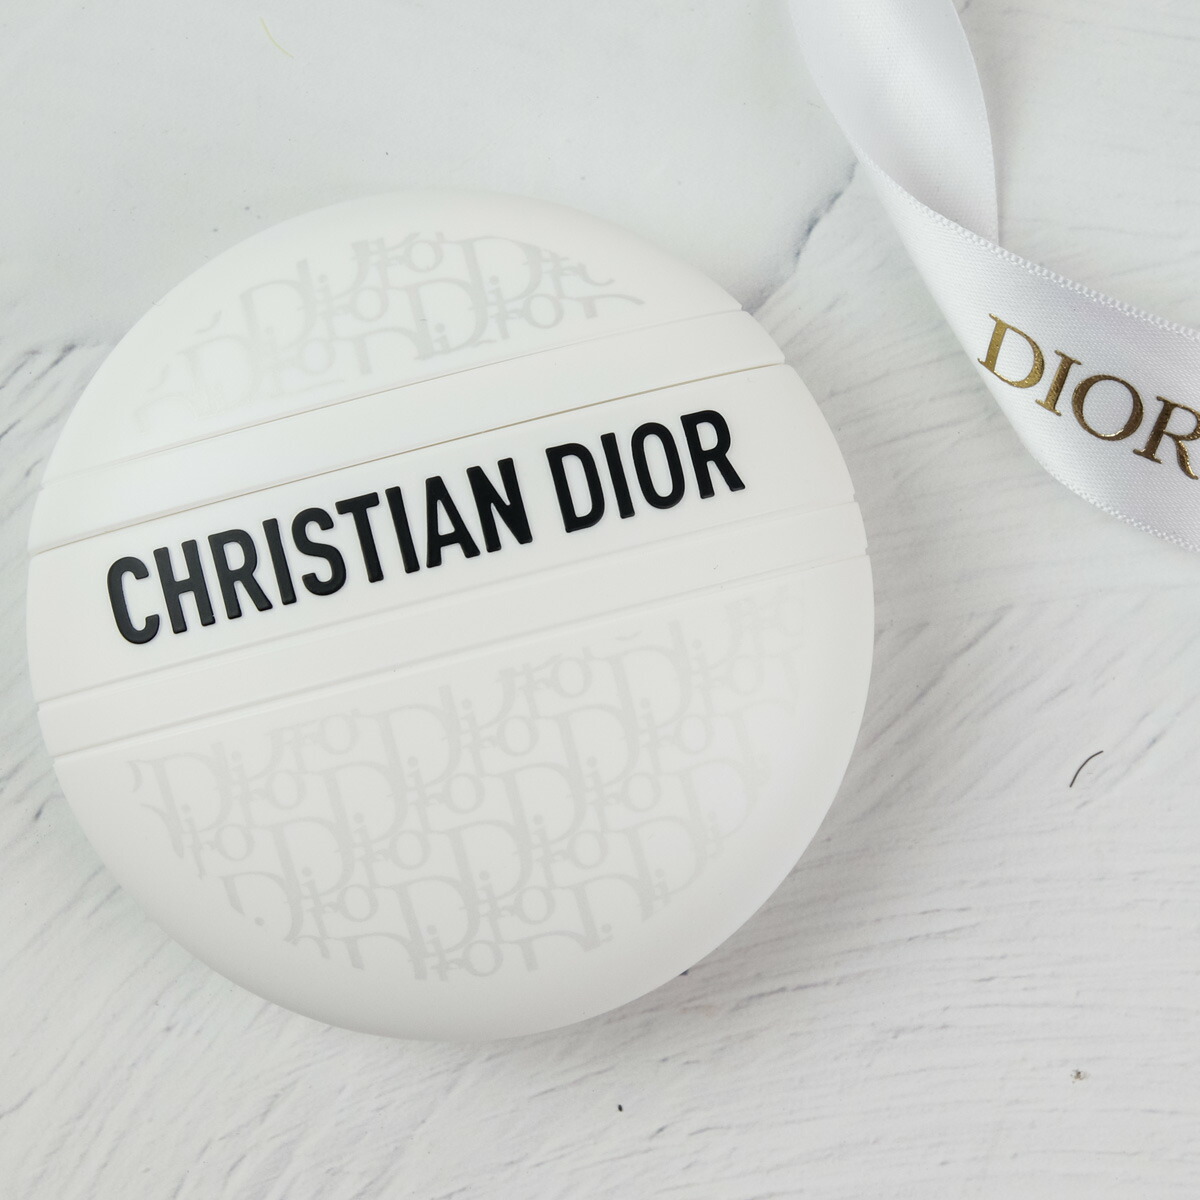 dior ハンドクリーム ディオール ハンドクリーム ギフト 正規品 ボディクリーム 化粧品 Dior マルチクリーム ル ボーム 50ml